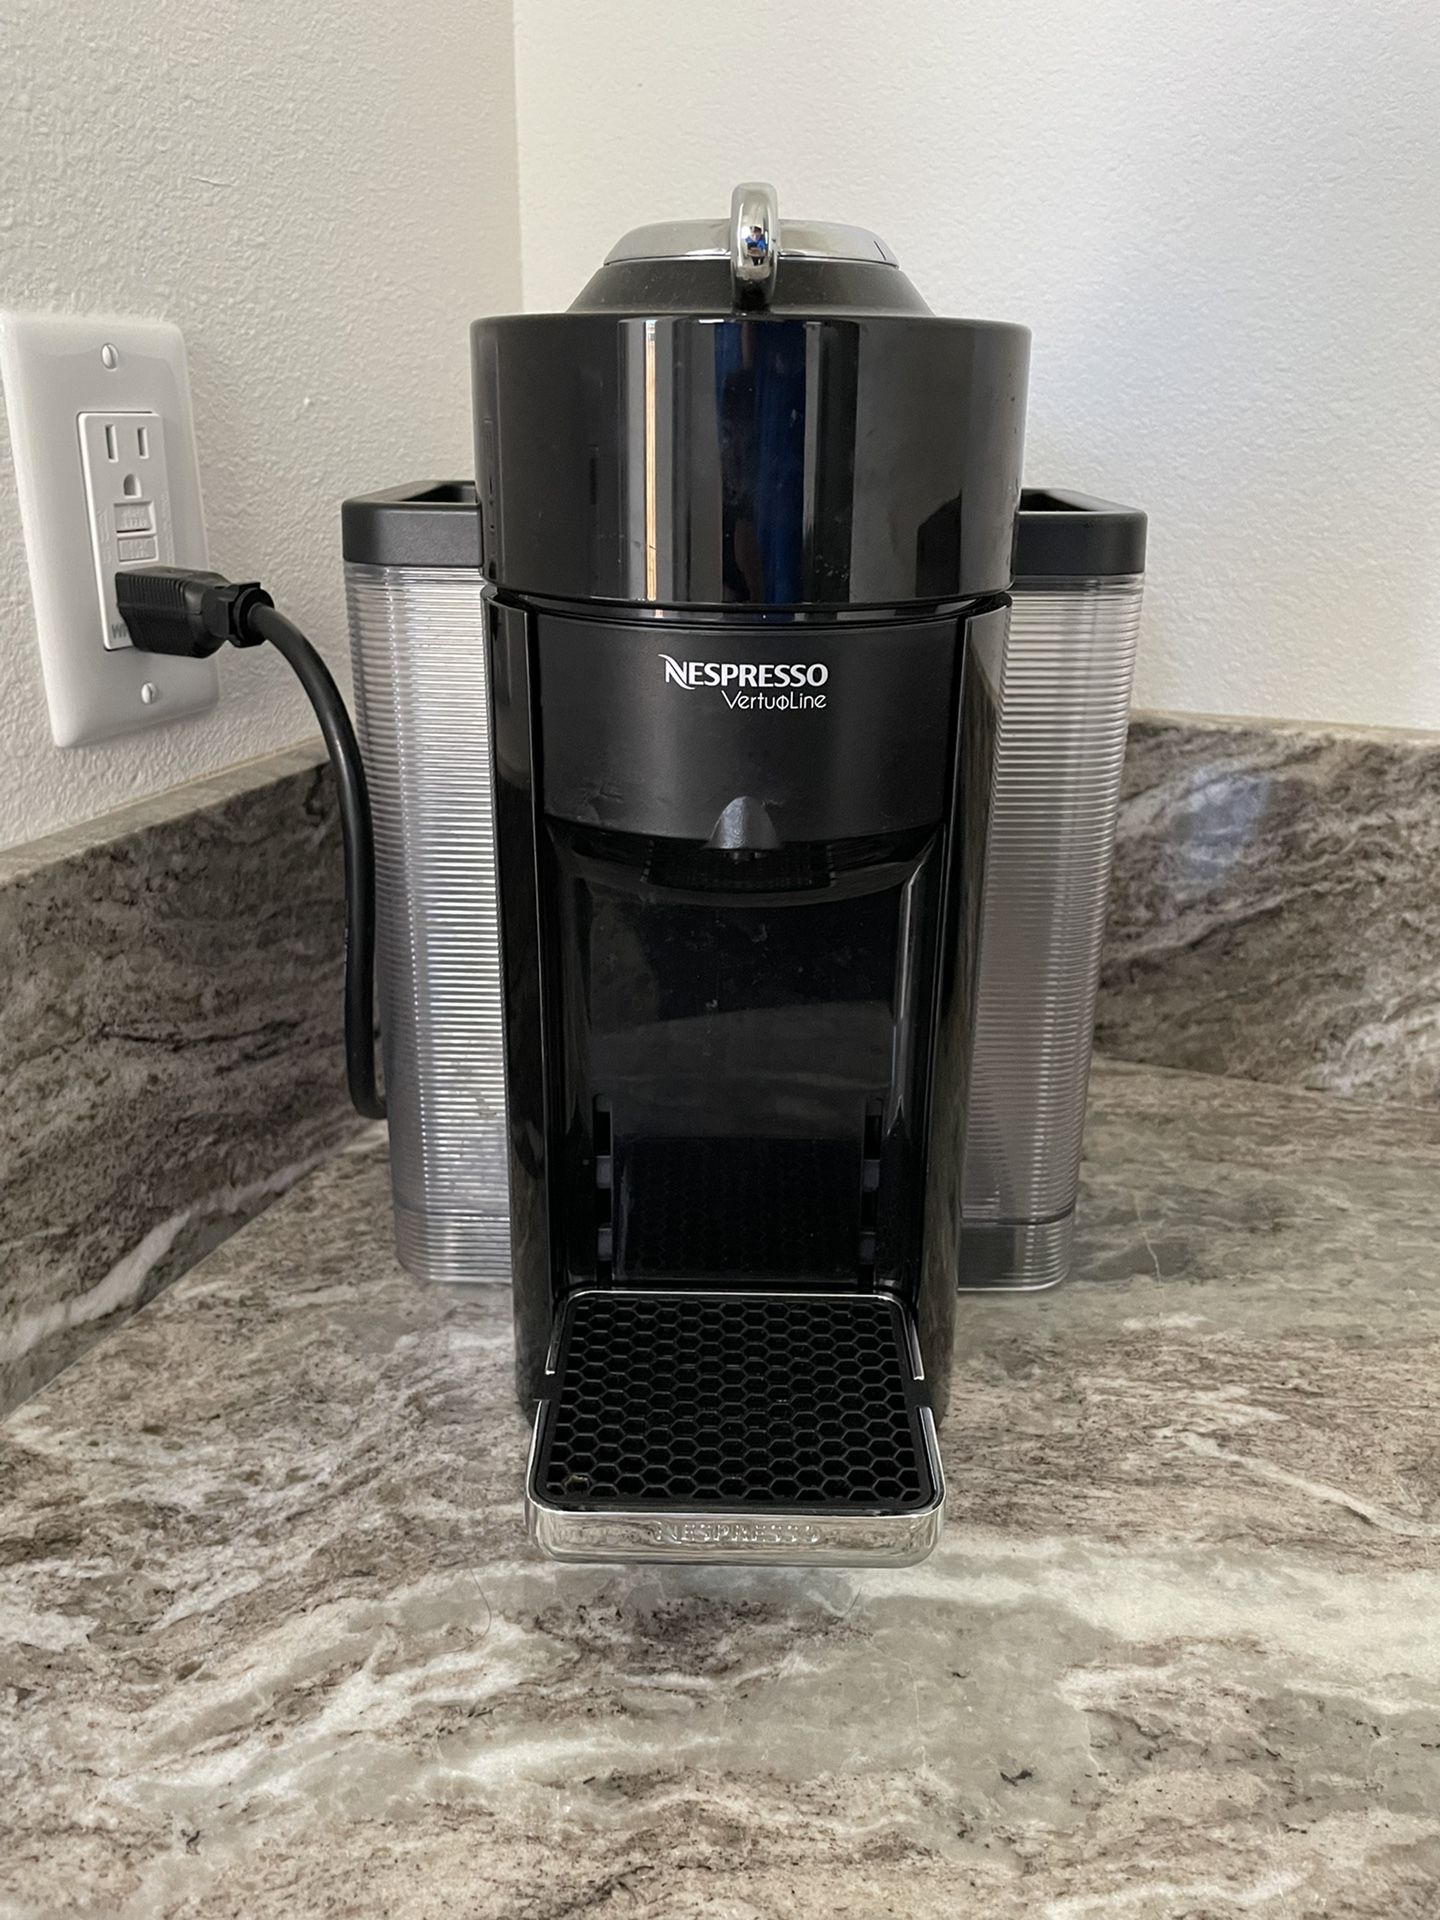 Nespresso Vurtuoline Coffee & Espresso Machine